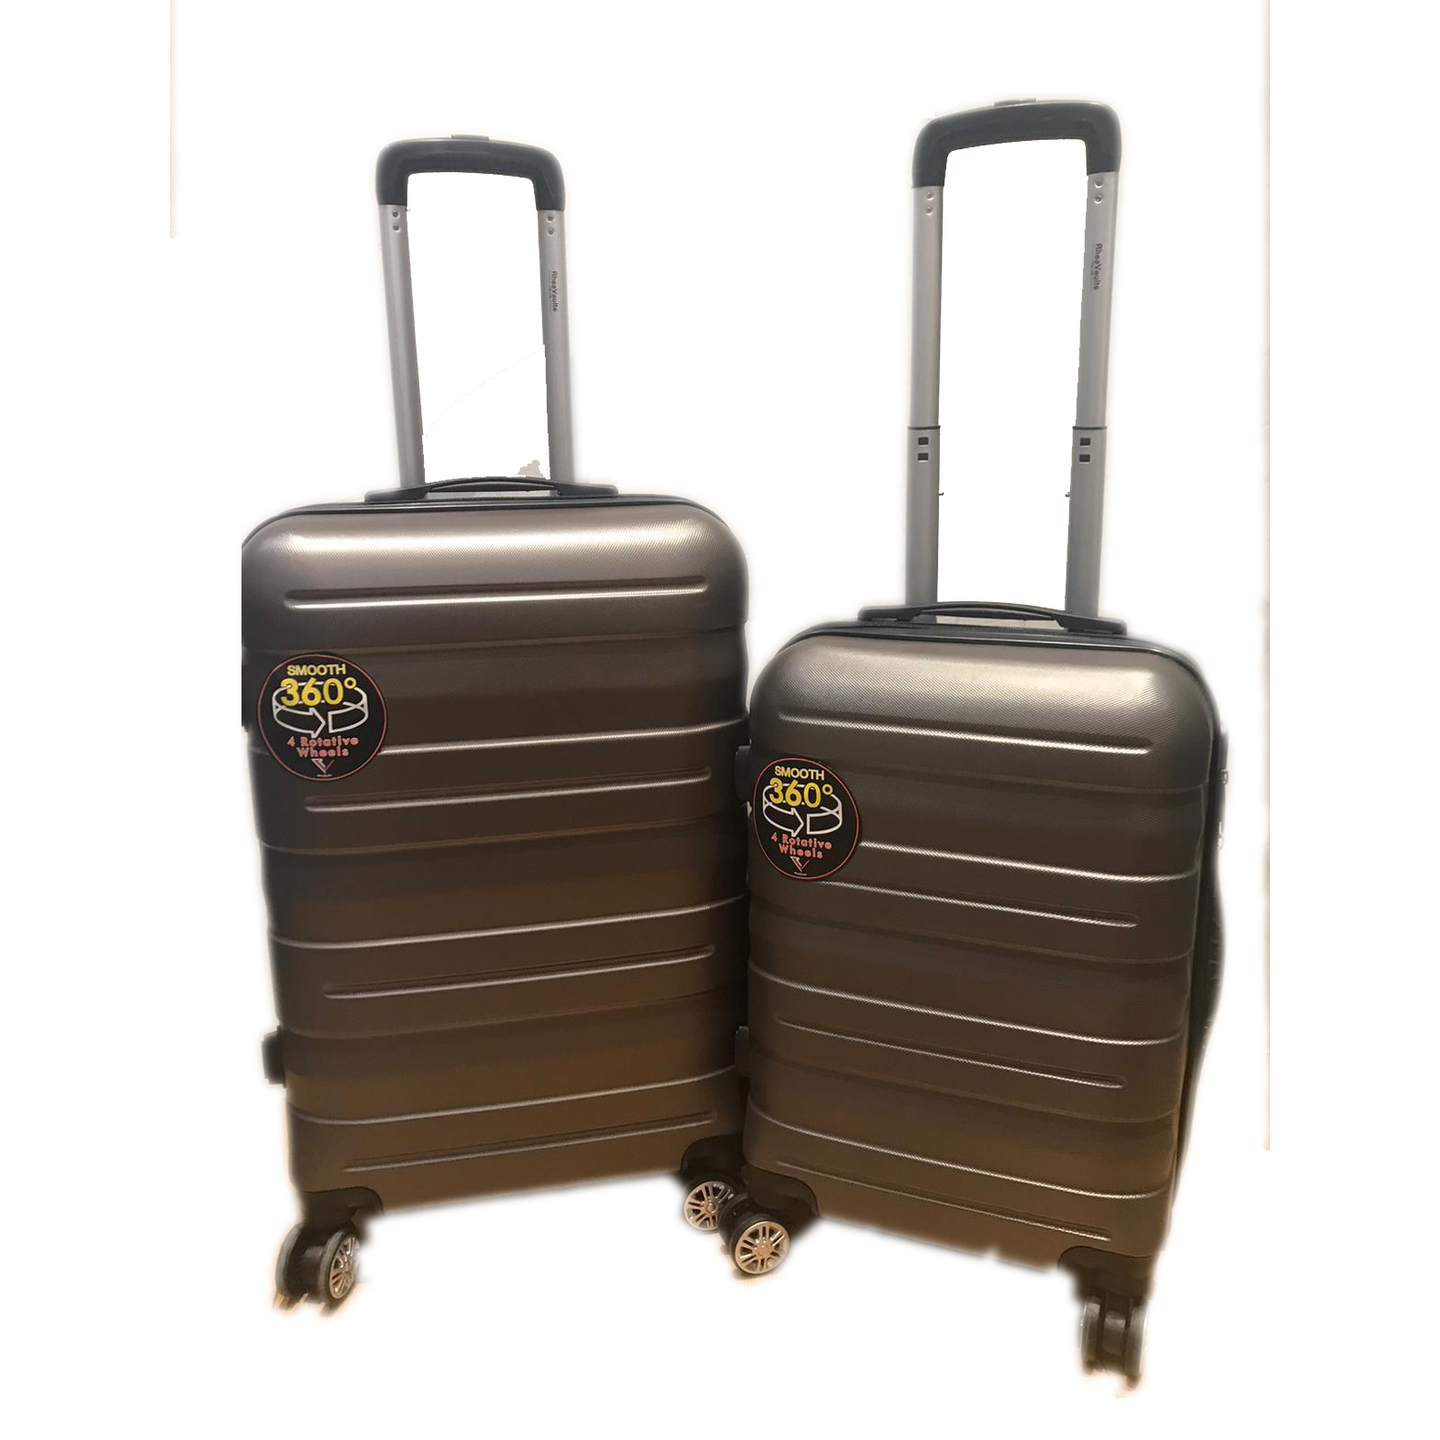 RV-131 Elegant Hard Box Luggage- Bronze 20 inch and 24 inch